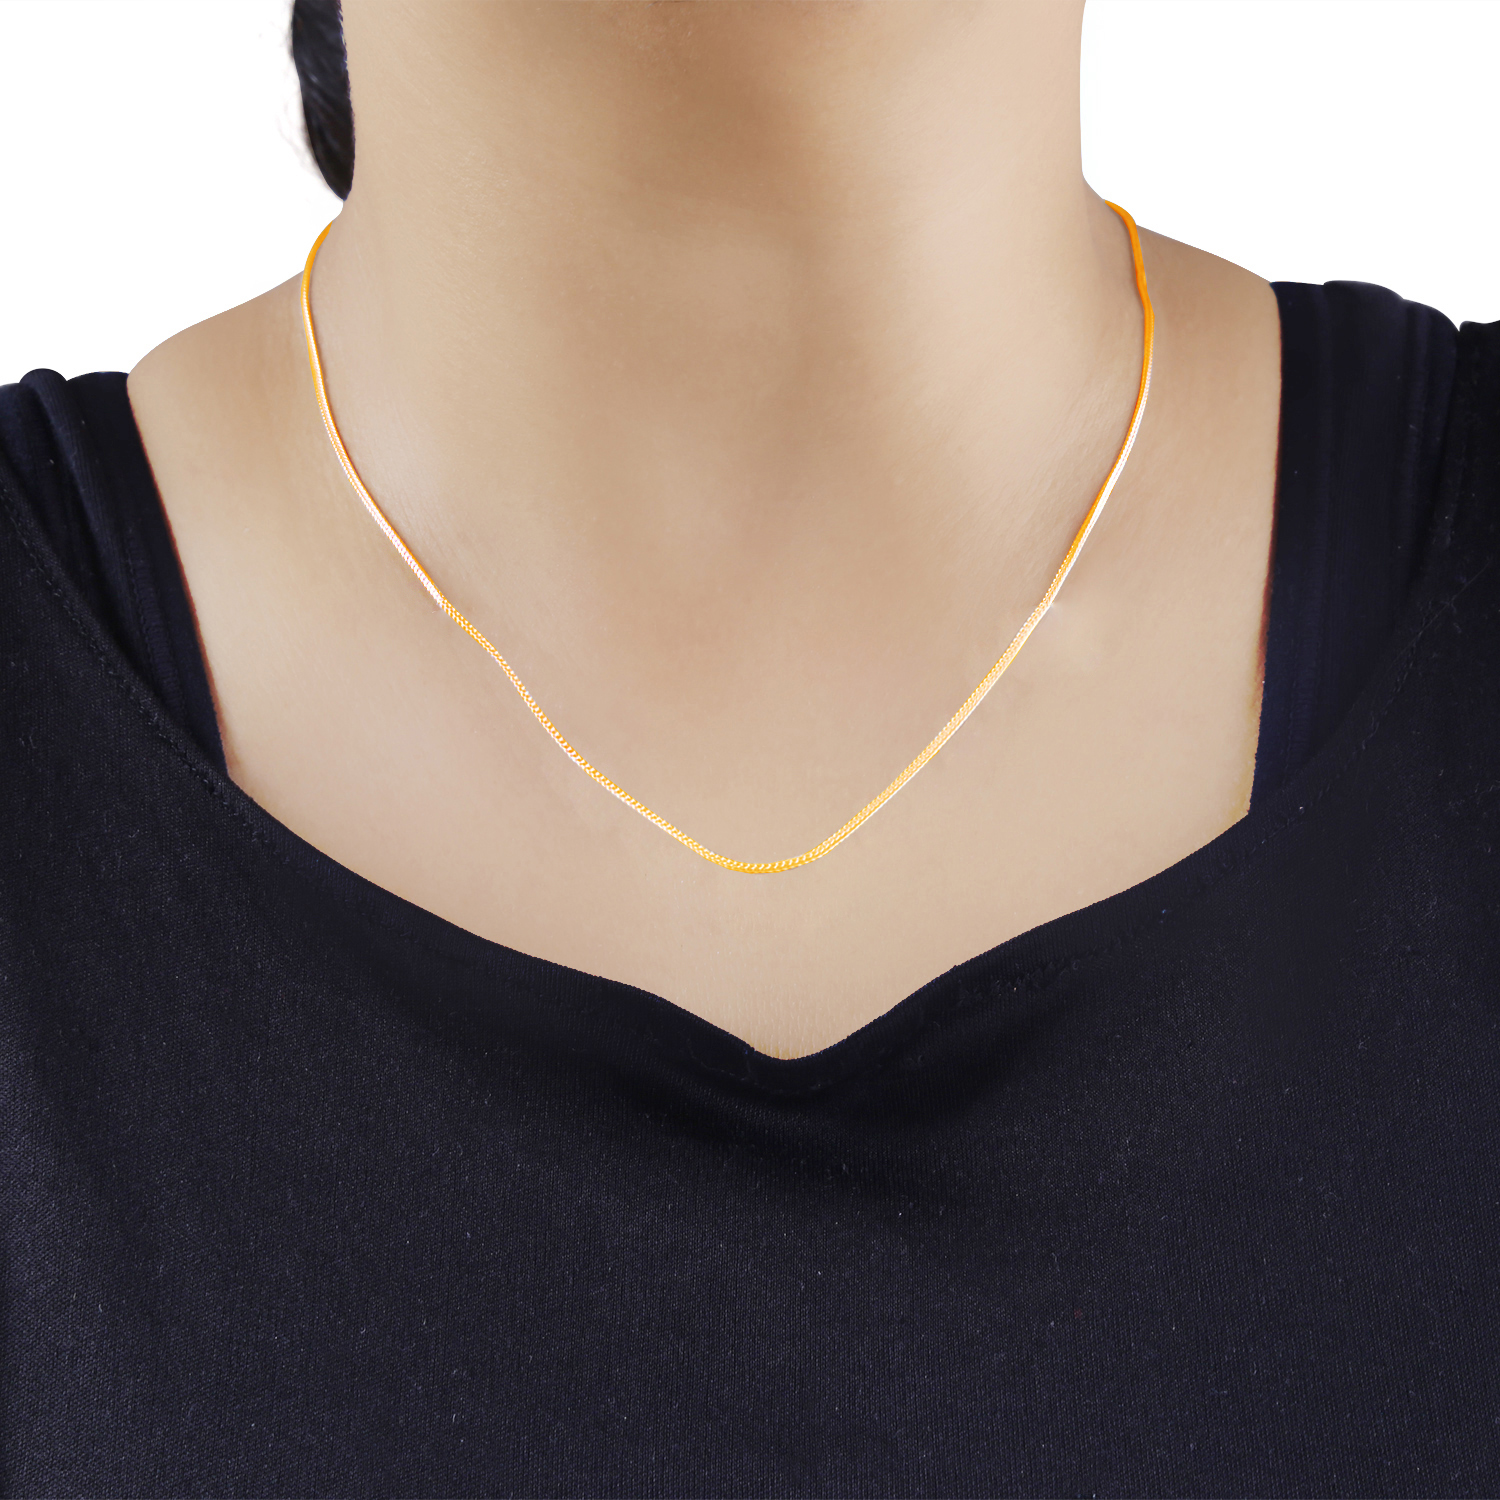 Shop Versatile Pearl 14K Gold Chain for Women | Gehna